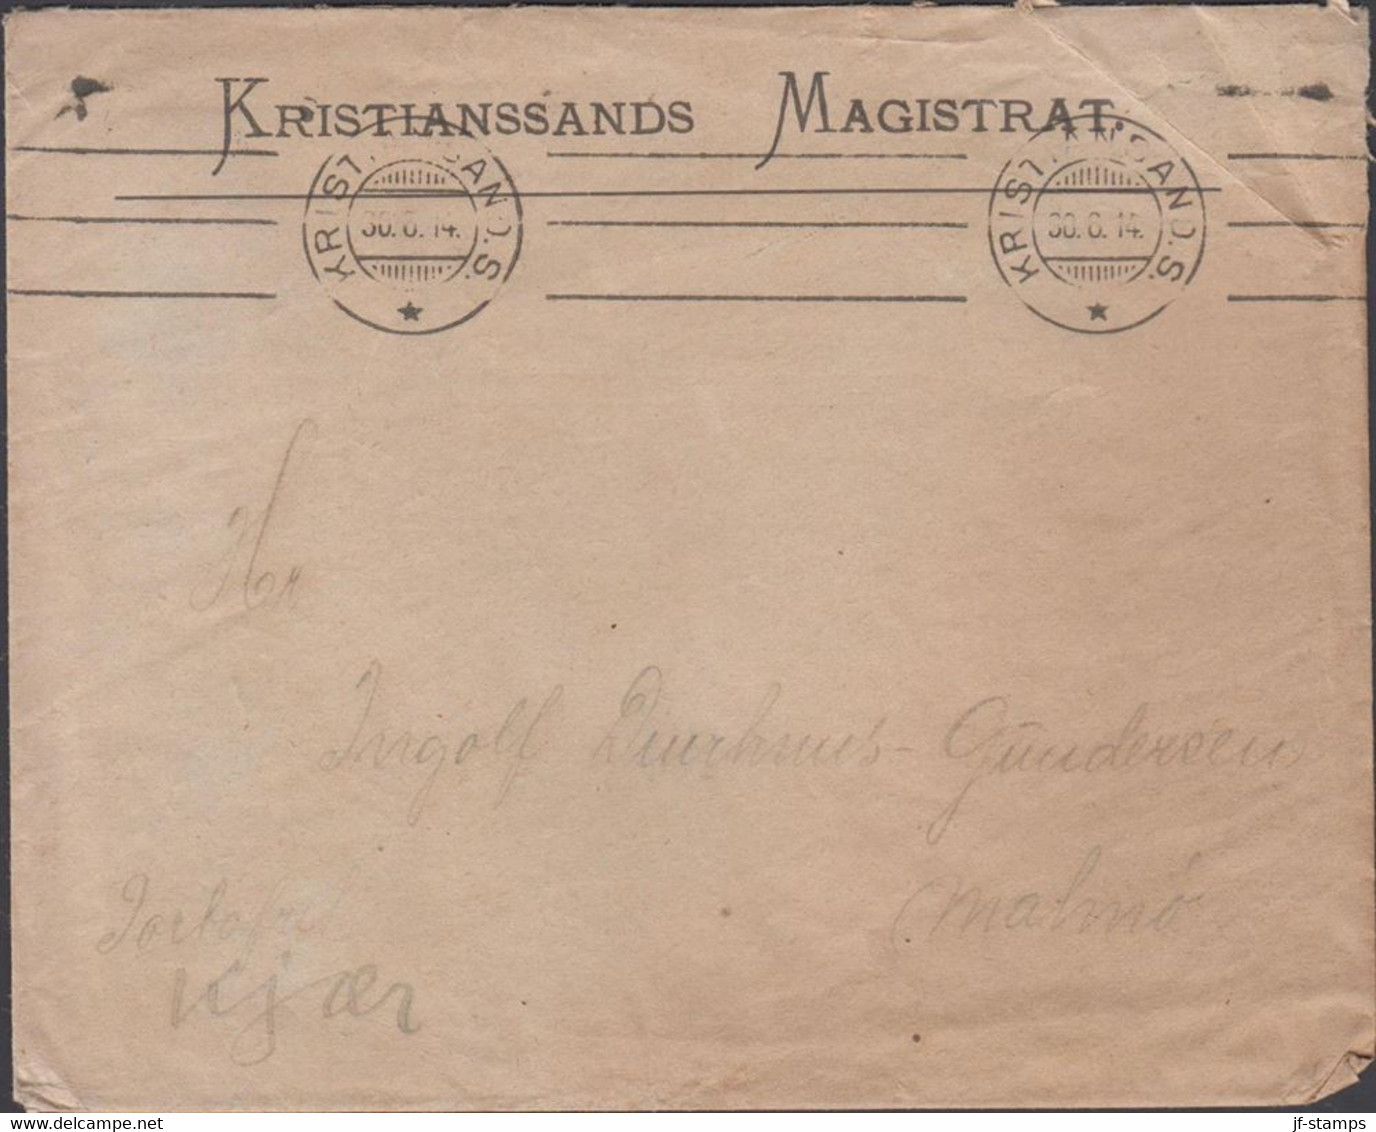 1914. NORGE. Portofri Cover To Malmö, Sverige From KRISTIANSSAND. S. 30.8.14. Letter Included.  - JF427644 - ...-1855 Préphilatélie